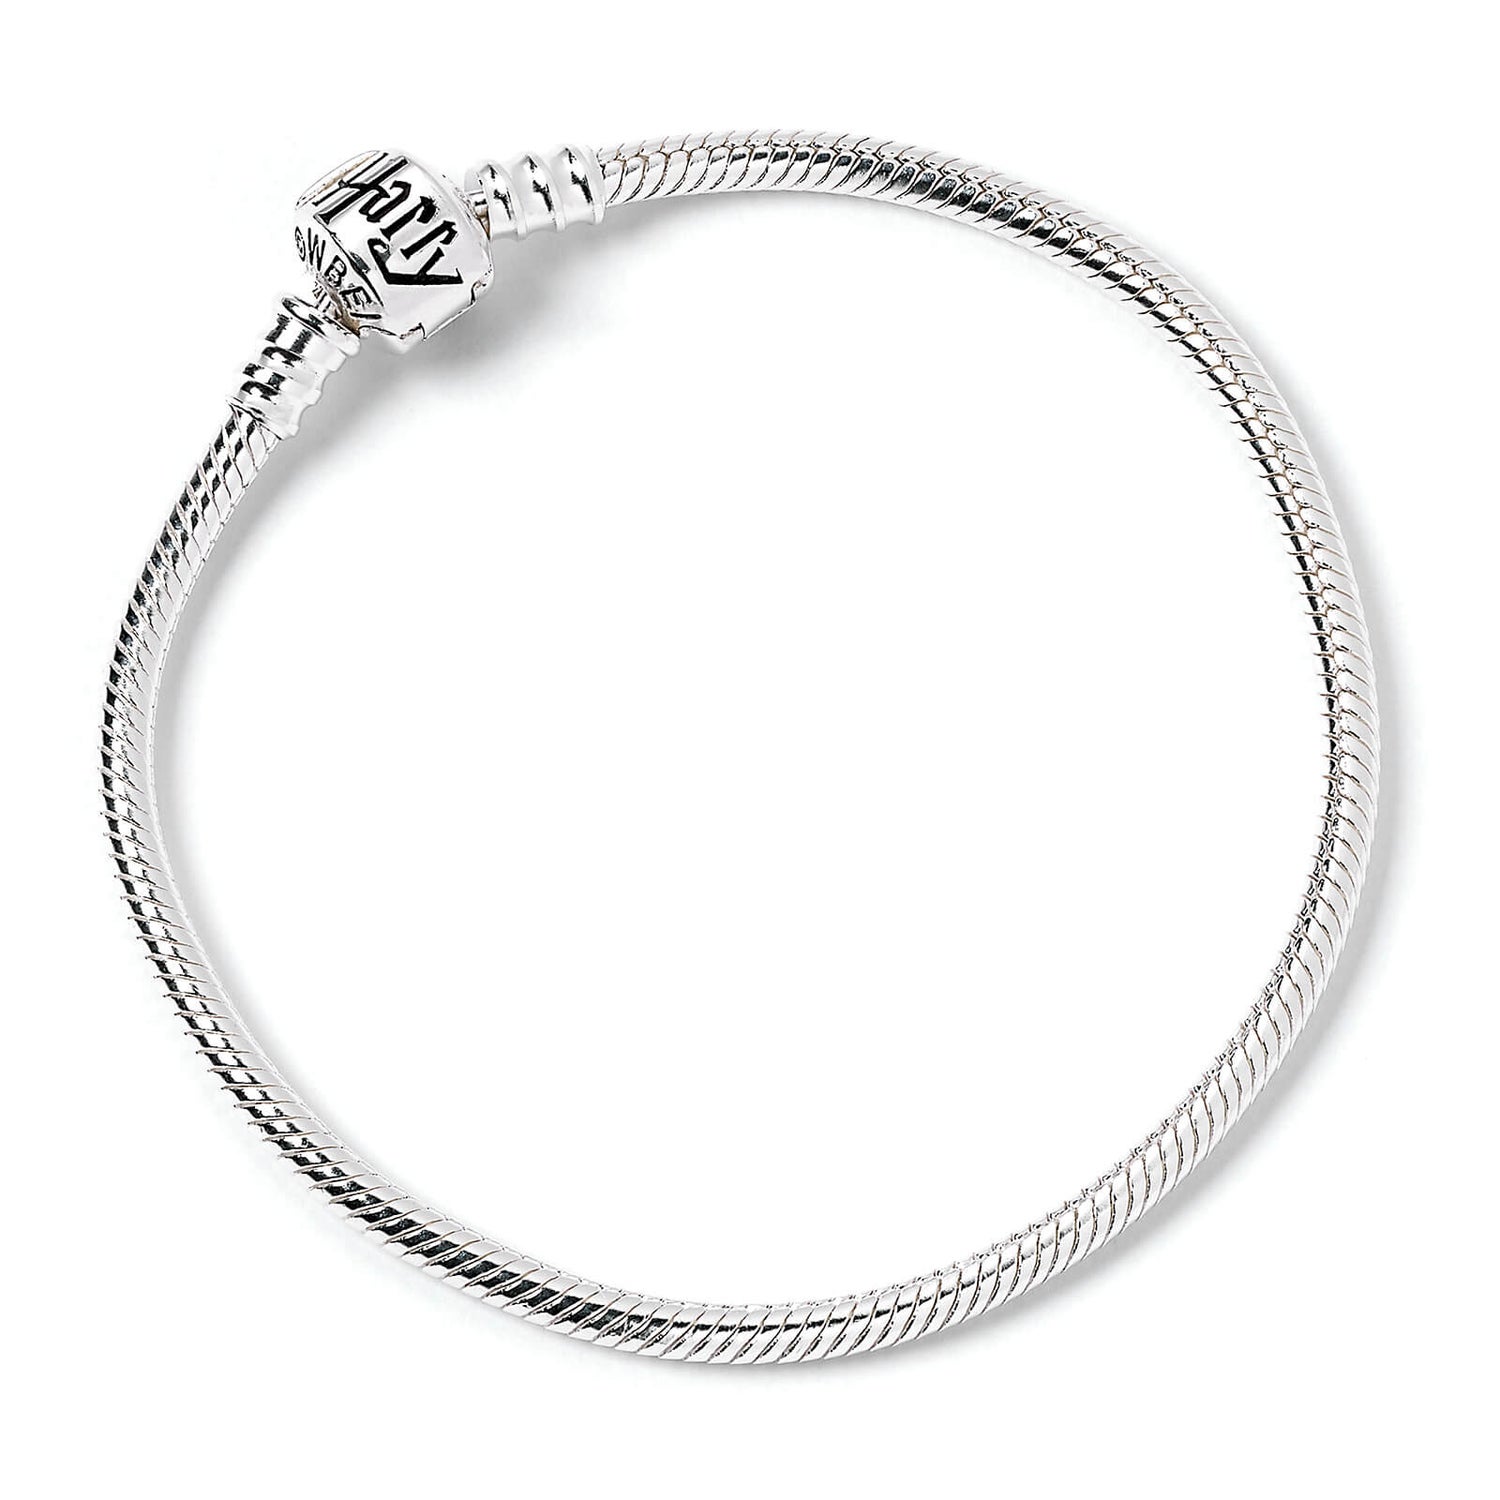 Harry Potter Charm Bracelet for Slider Charms -Silver